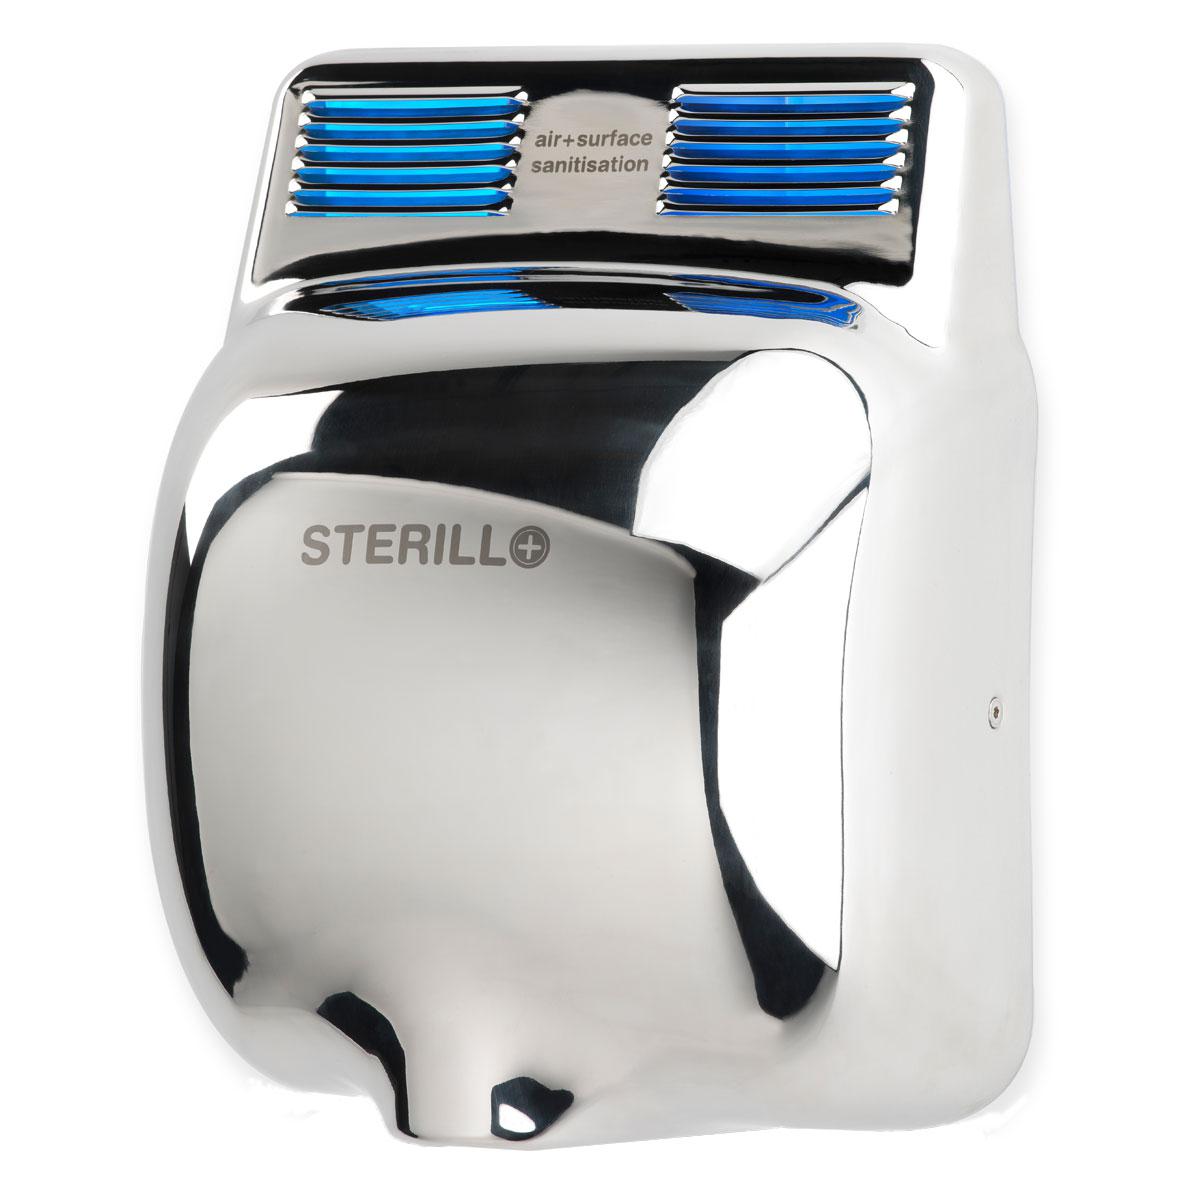 Sterillo Stainless Steel Hand Dryer